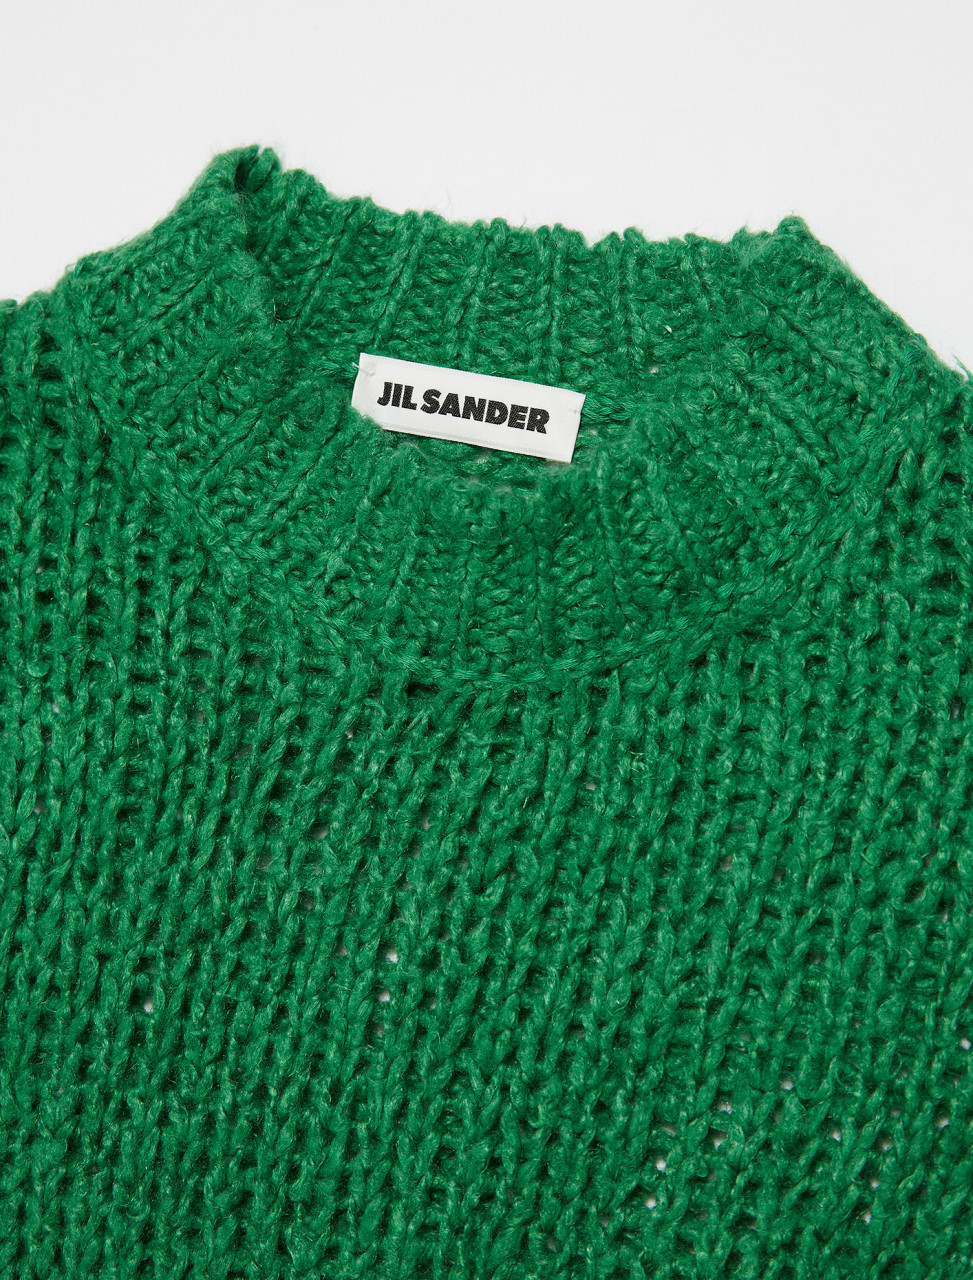 Jil Sander Chunky Textured Knit Sweater in Medium Green | Voo Store ...